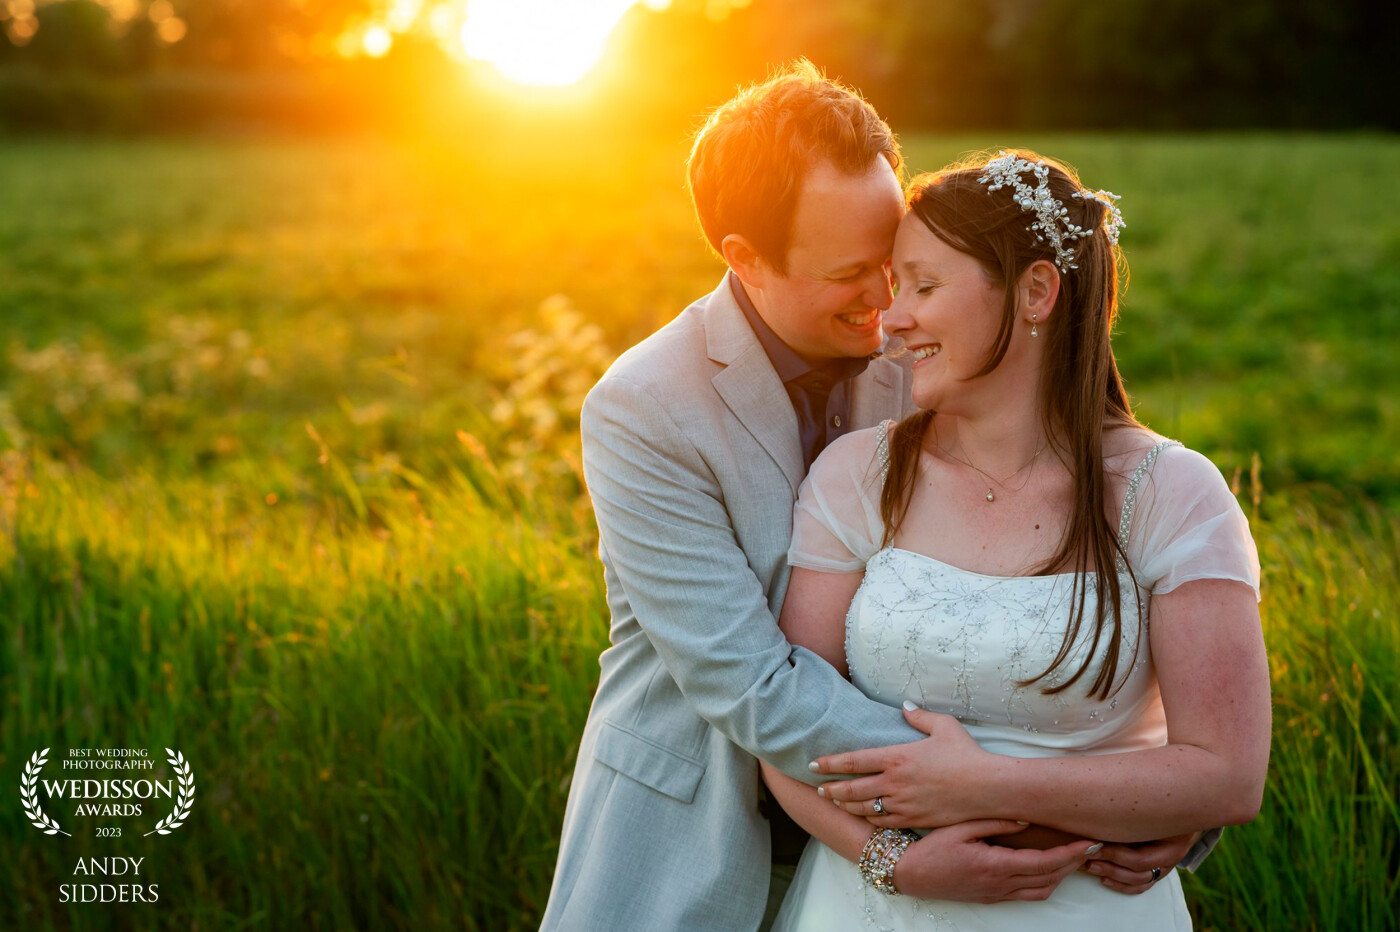 We enjoyed beautiful golden hour light at Sam & Laura's wedding at Woodland Weddings in Hertfordshire, UK.